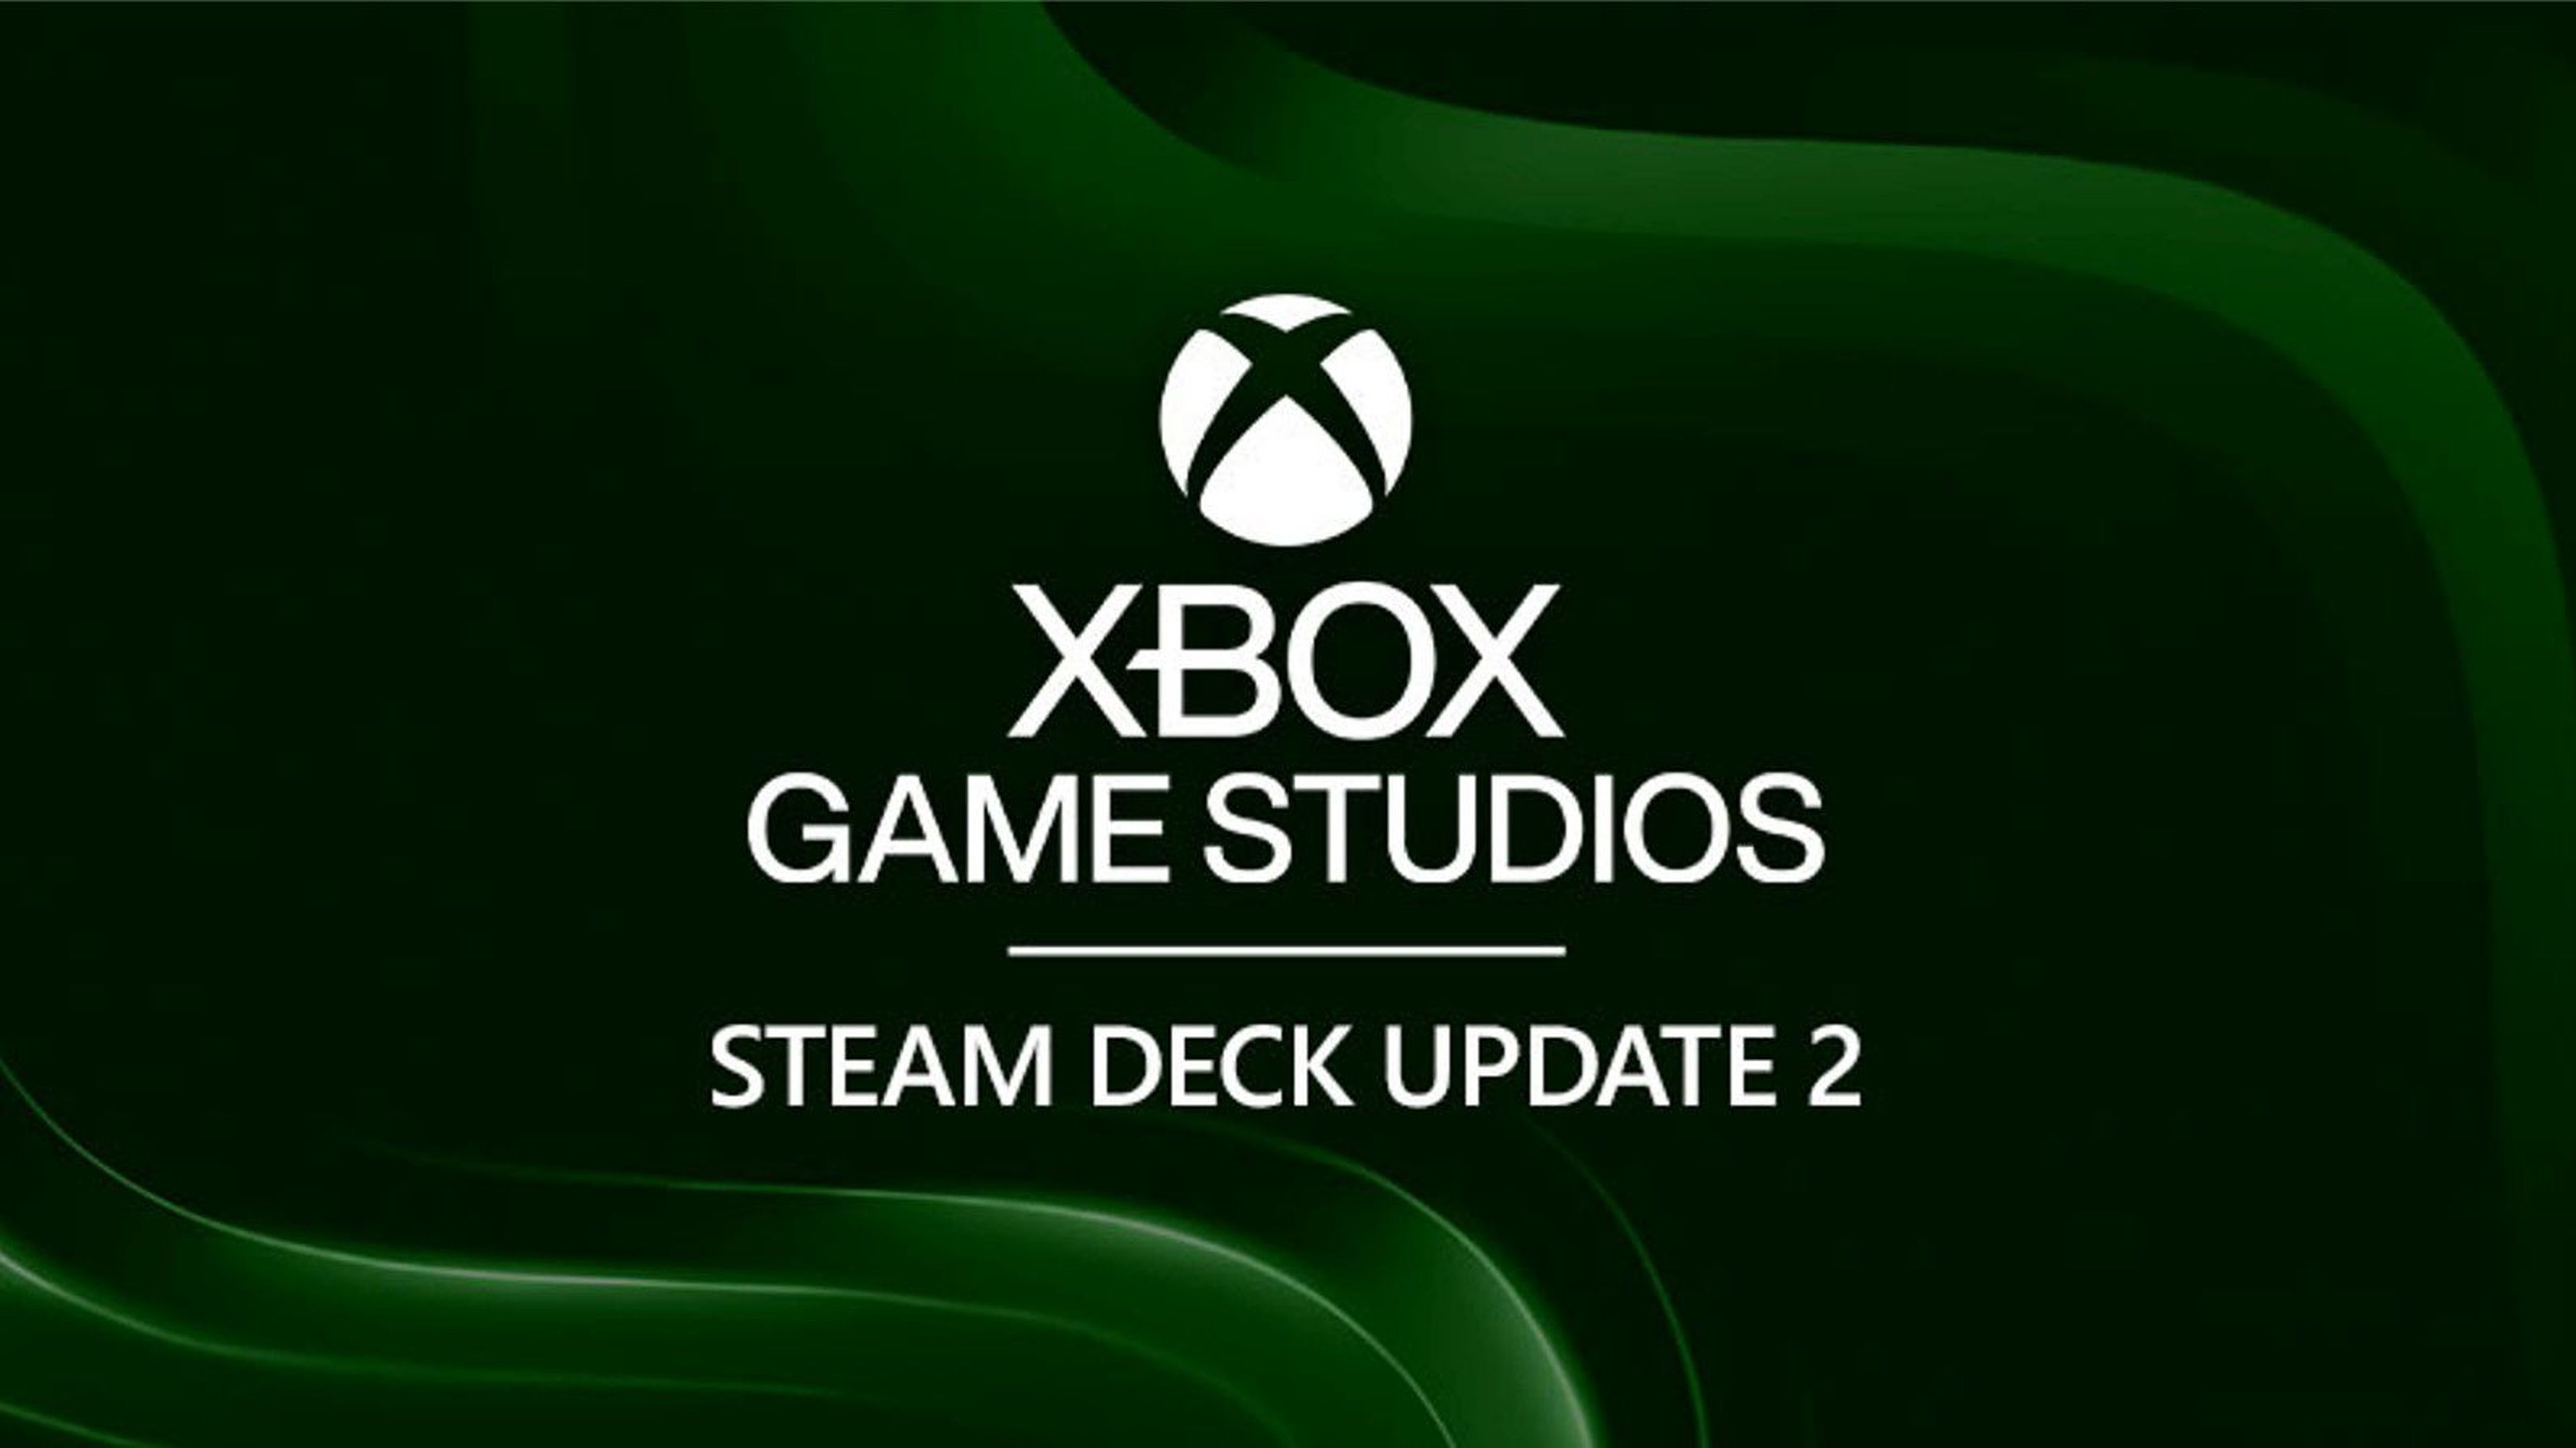 Juegos de Xbox Game Studios verificados para Steam Deck